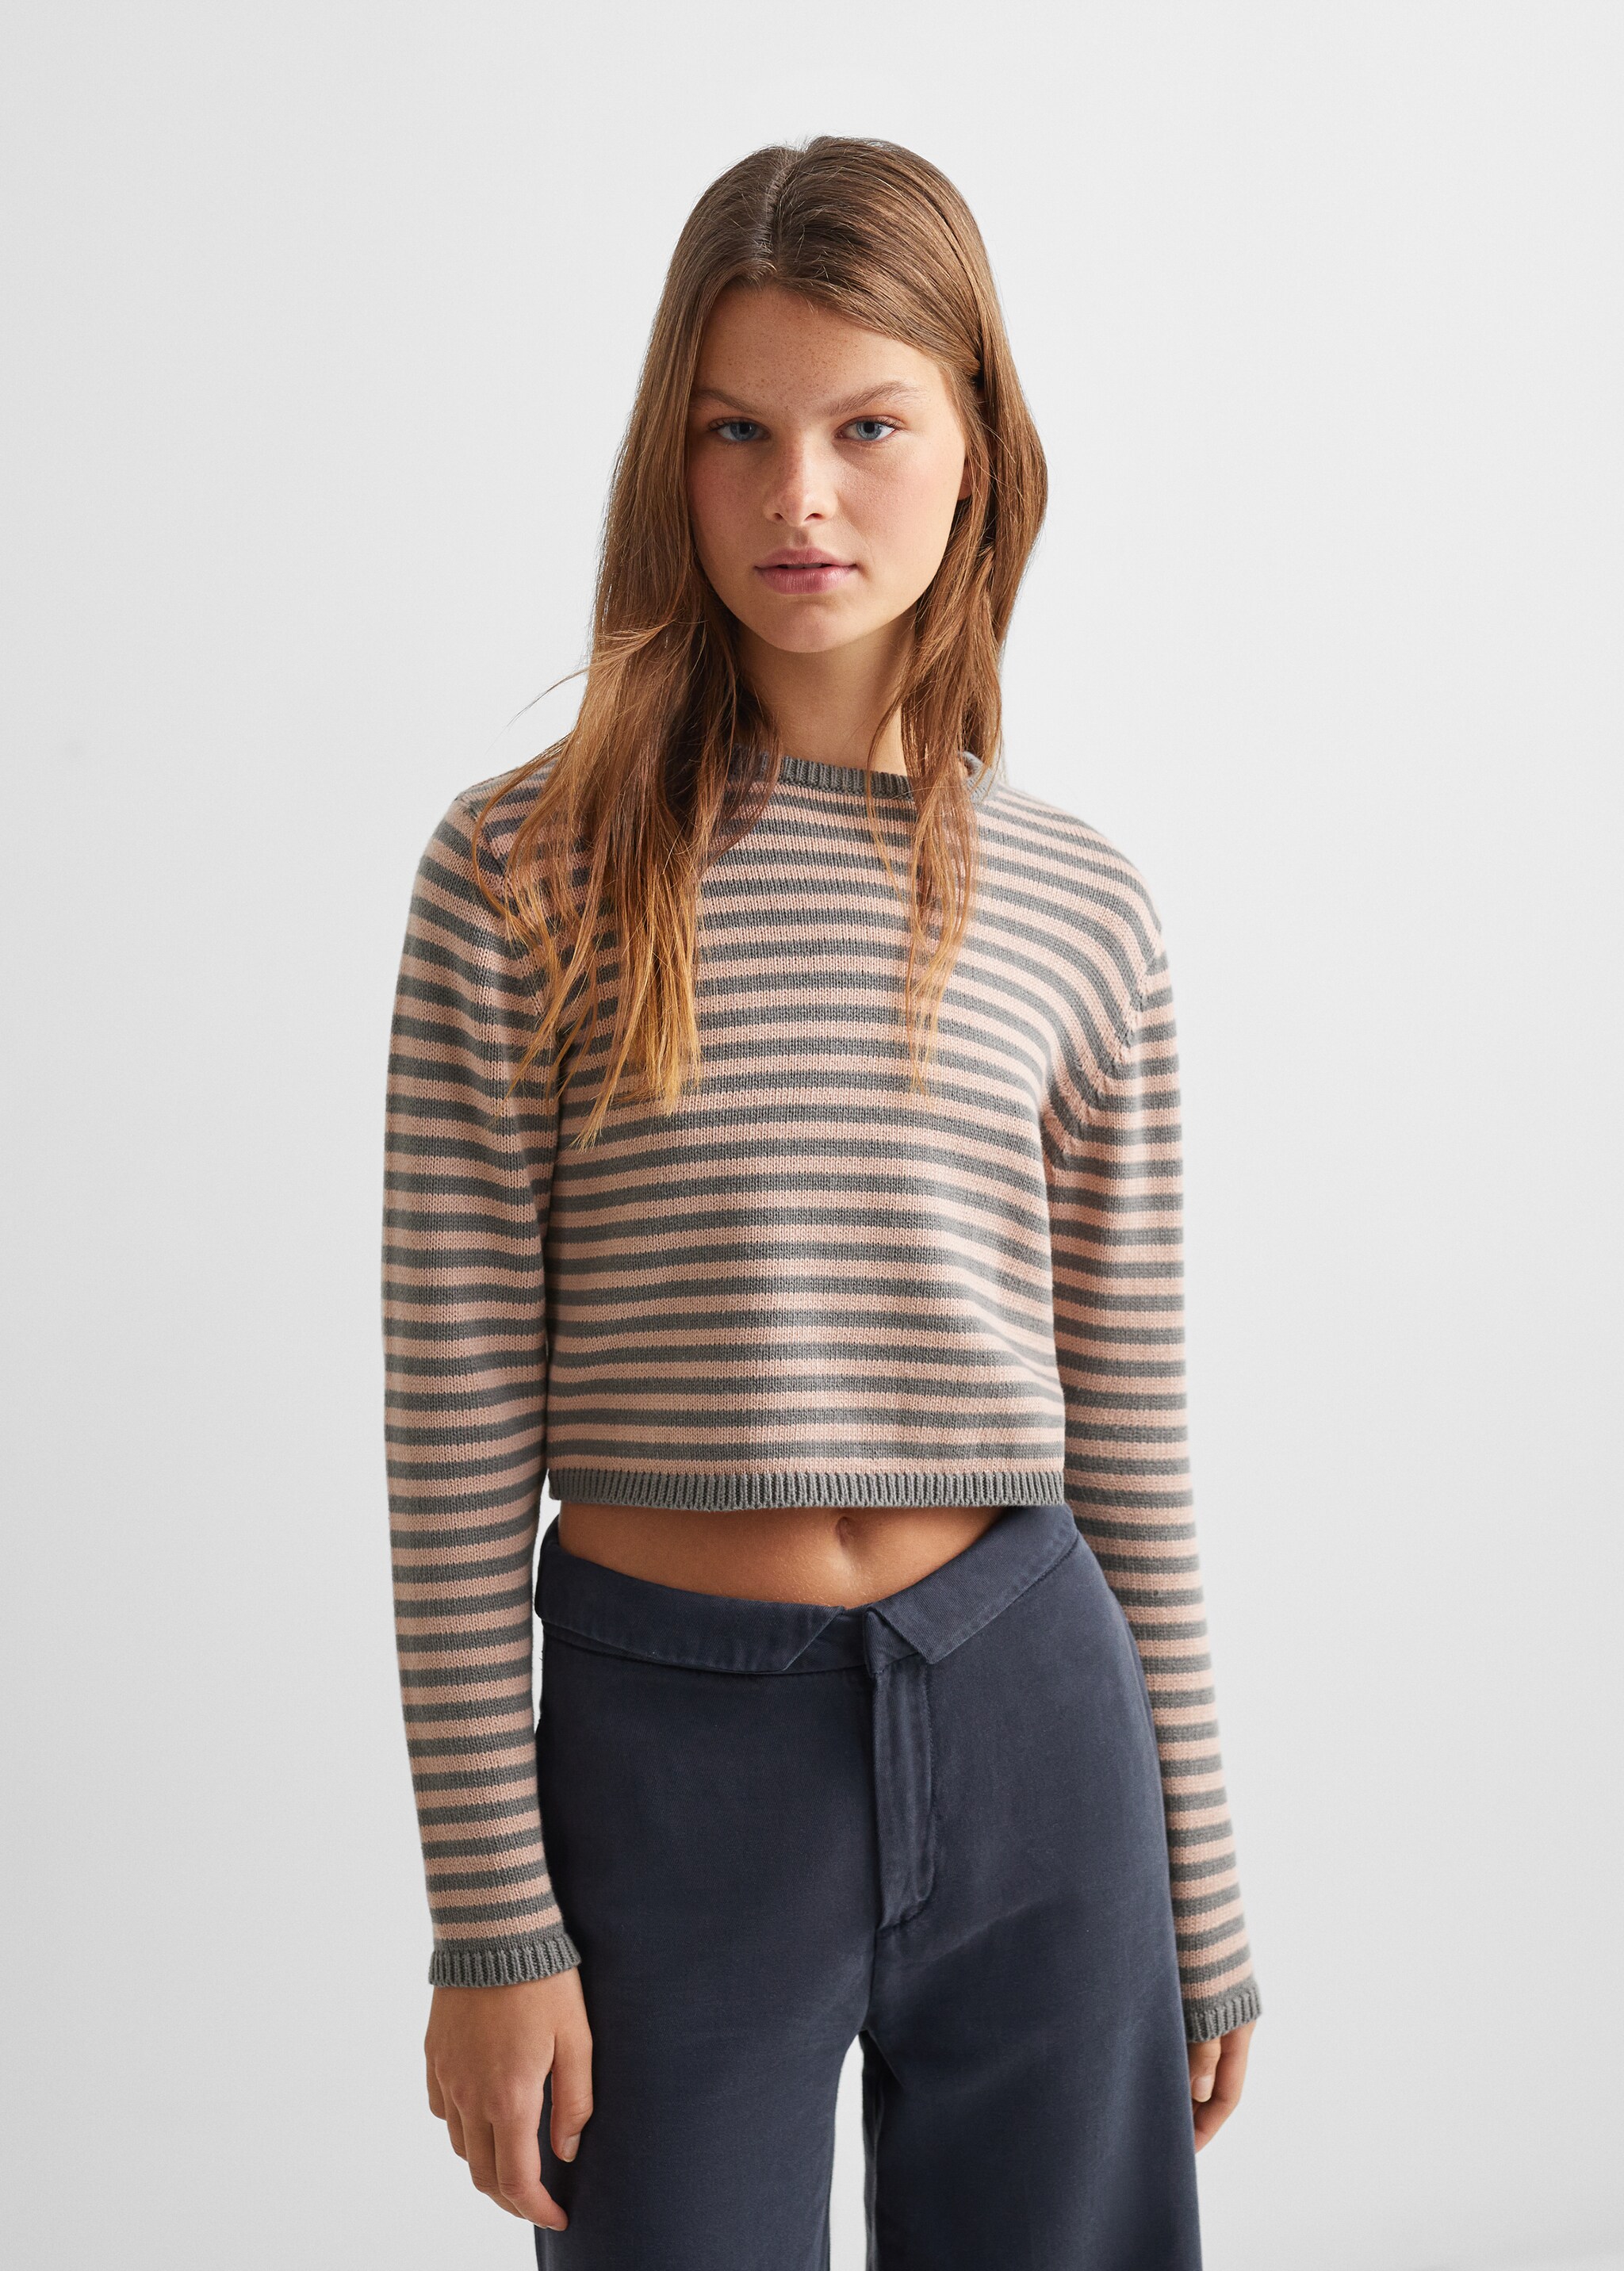 Striped knit sweater - Medium plane